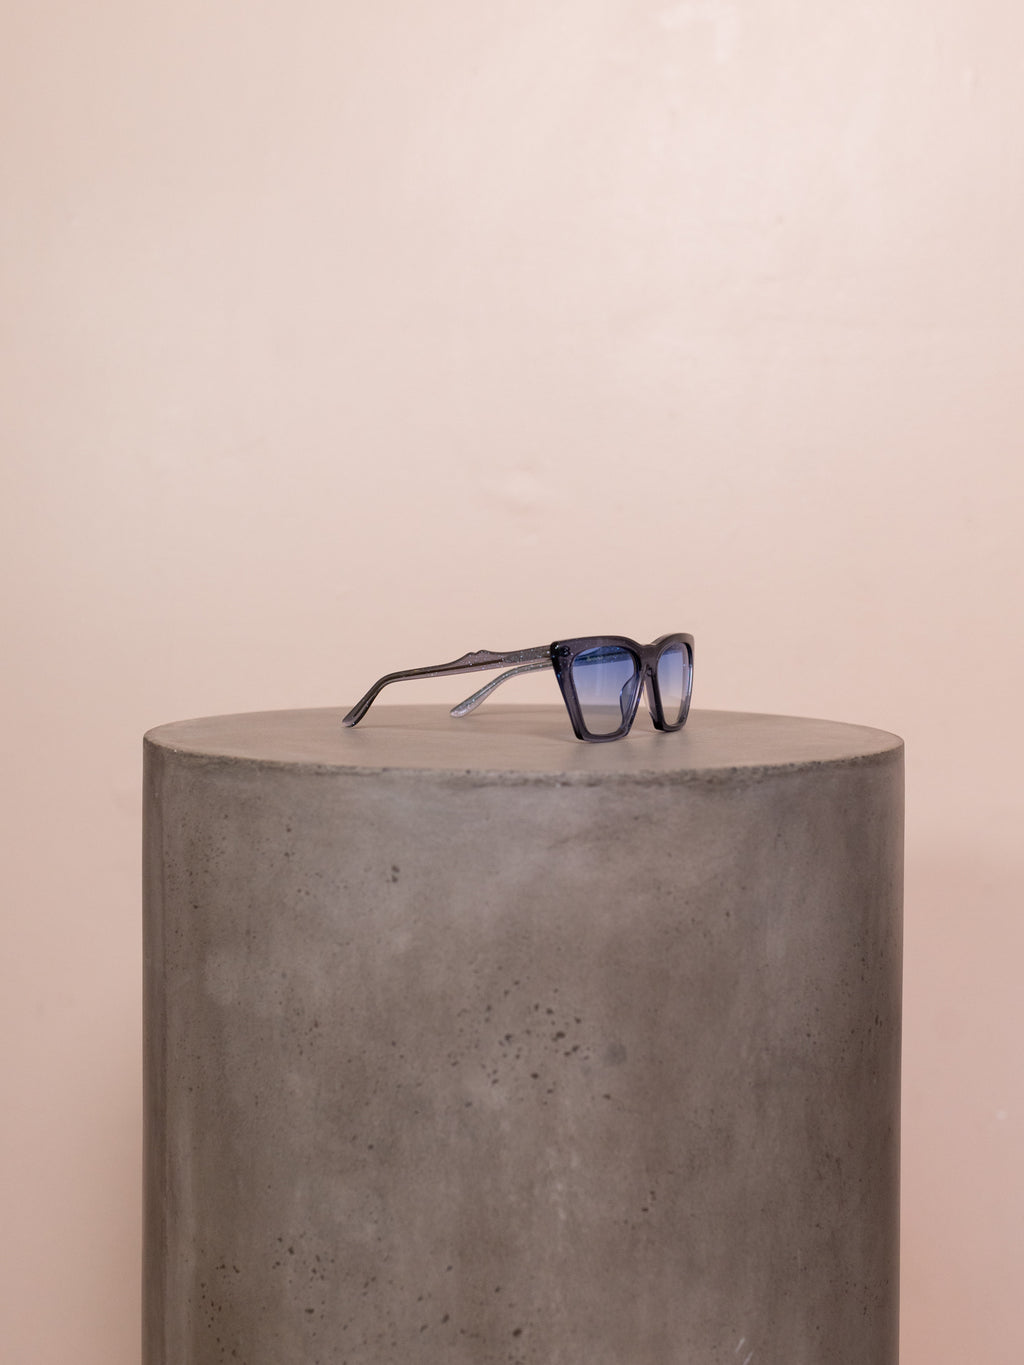 Blue angular sunglasses on pedestal against pink background